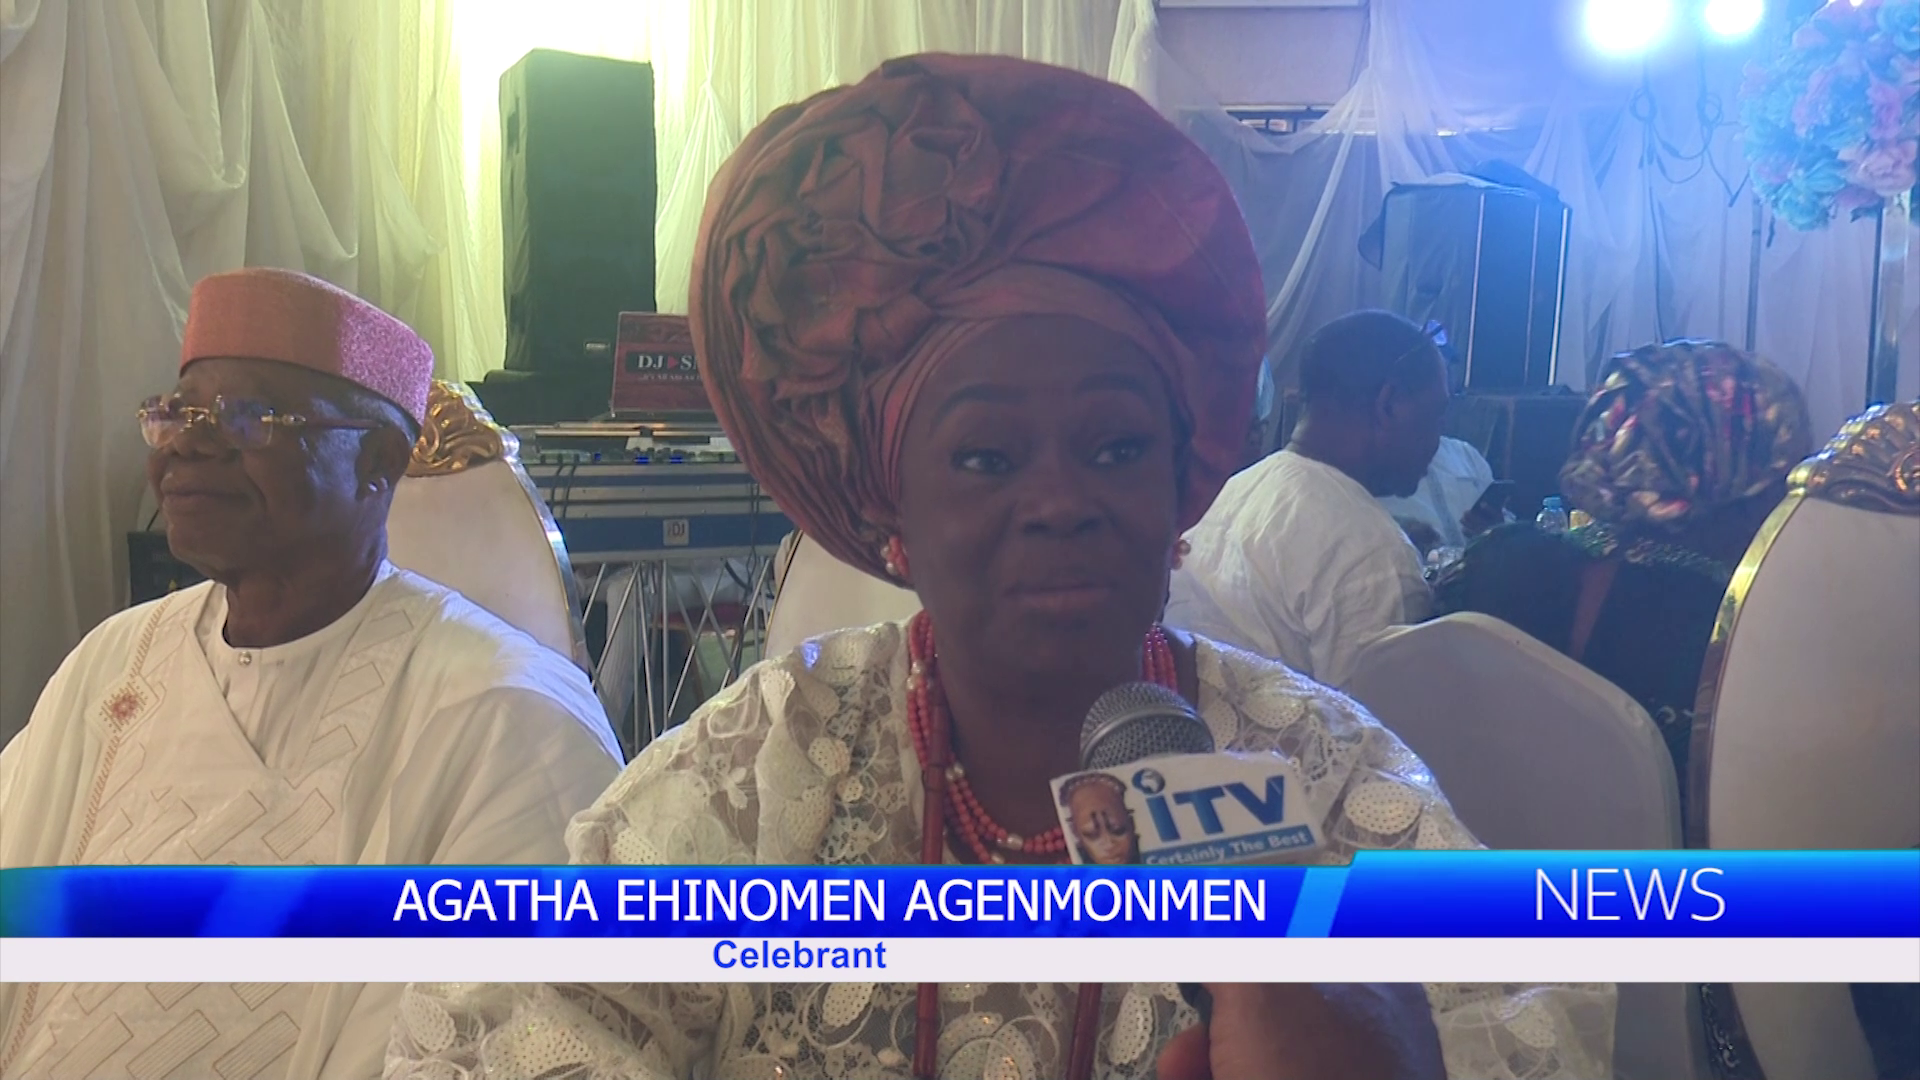 70th Birthday Celebration Of Dame Agatha Agenmonmen Held In Grand Style In Benin City